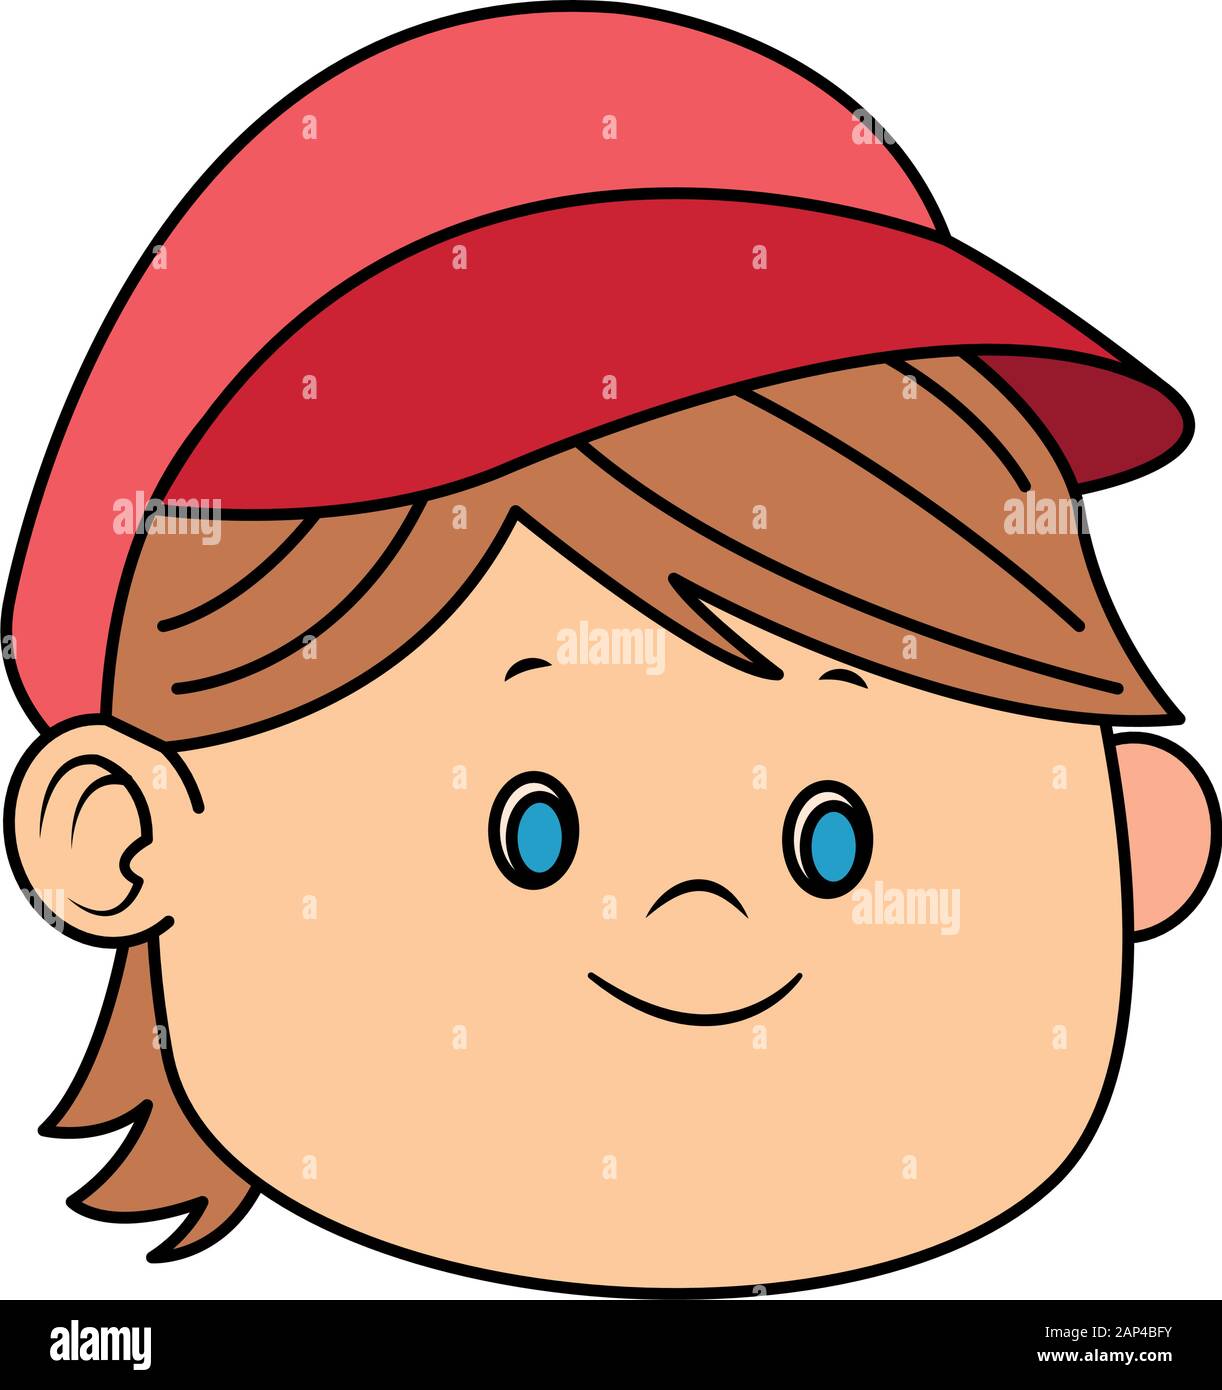 cartoon boy face wearing a cap Stock Vector Image & Art - Alamy